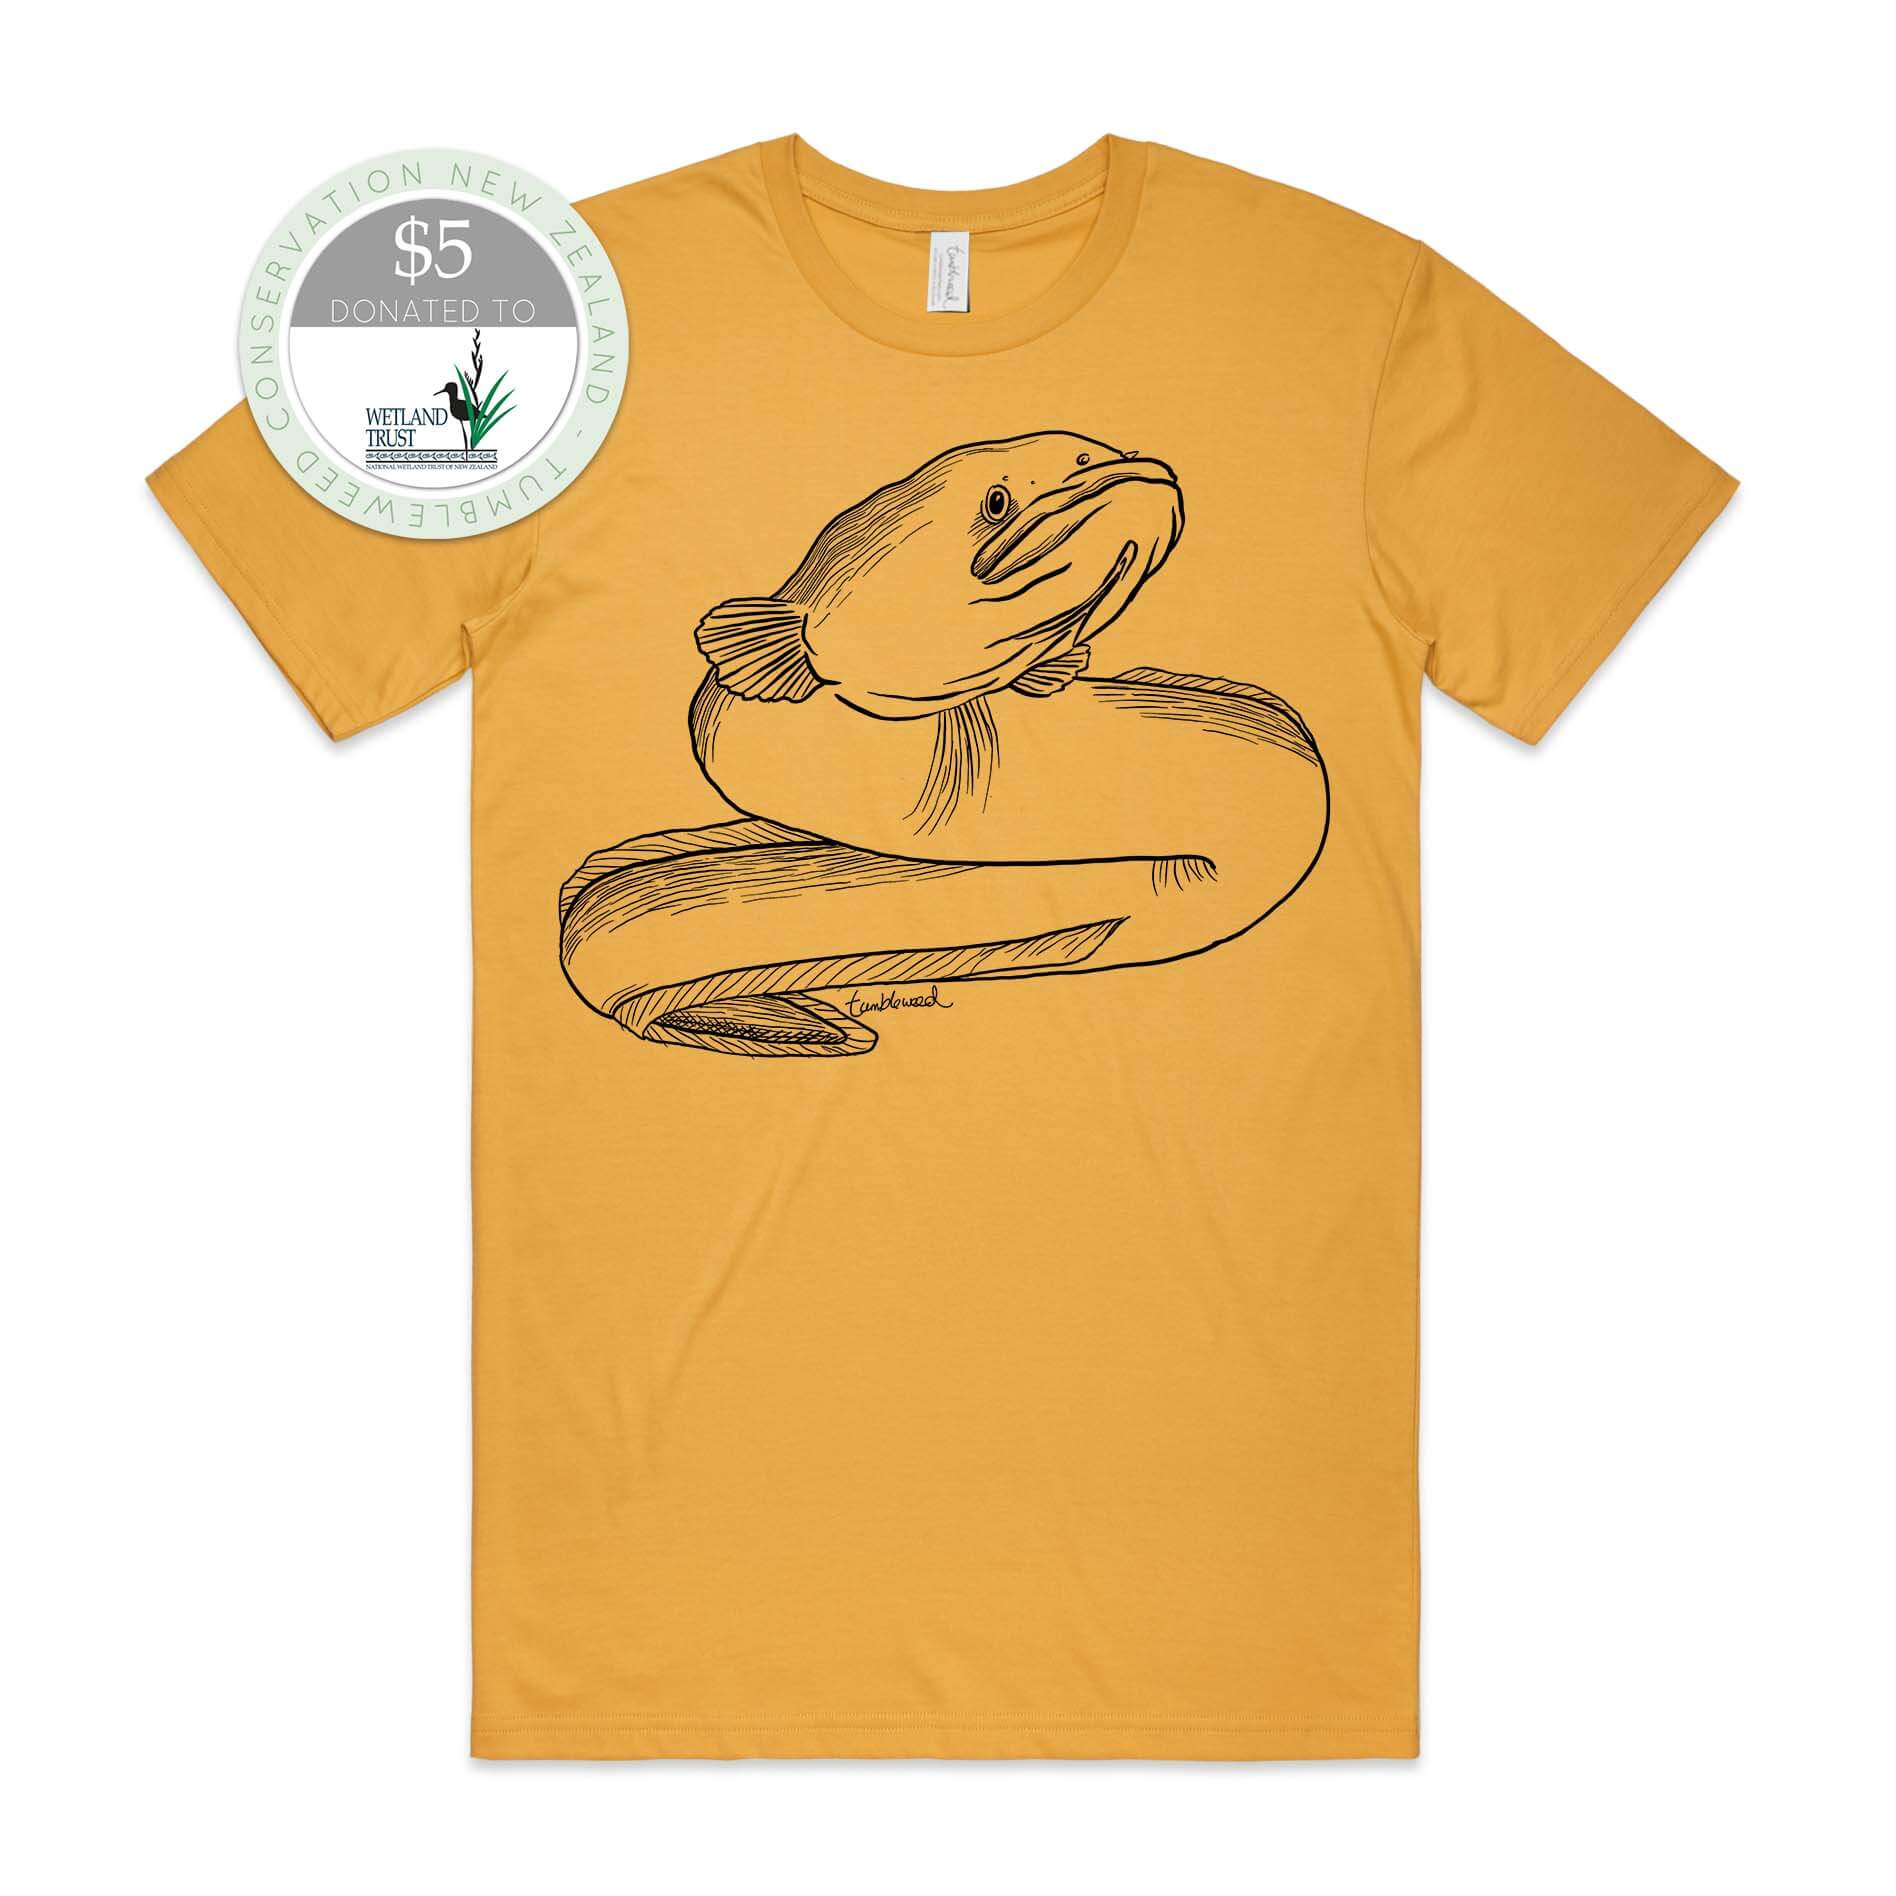 Charcoal, female t-shirt featuring a screen printed Longfin Eel/Tuna design.